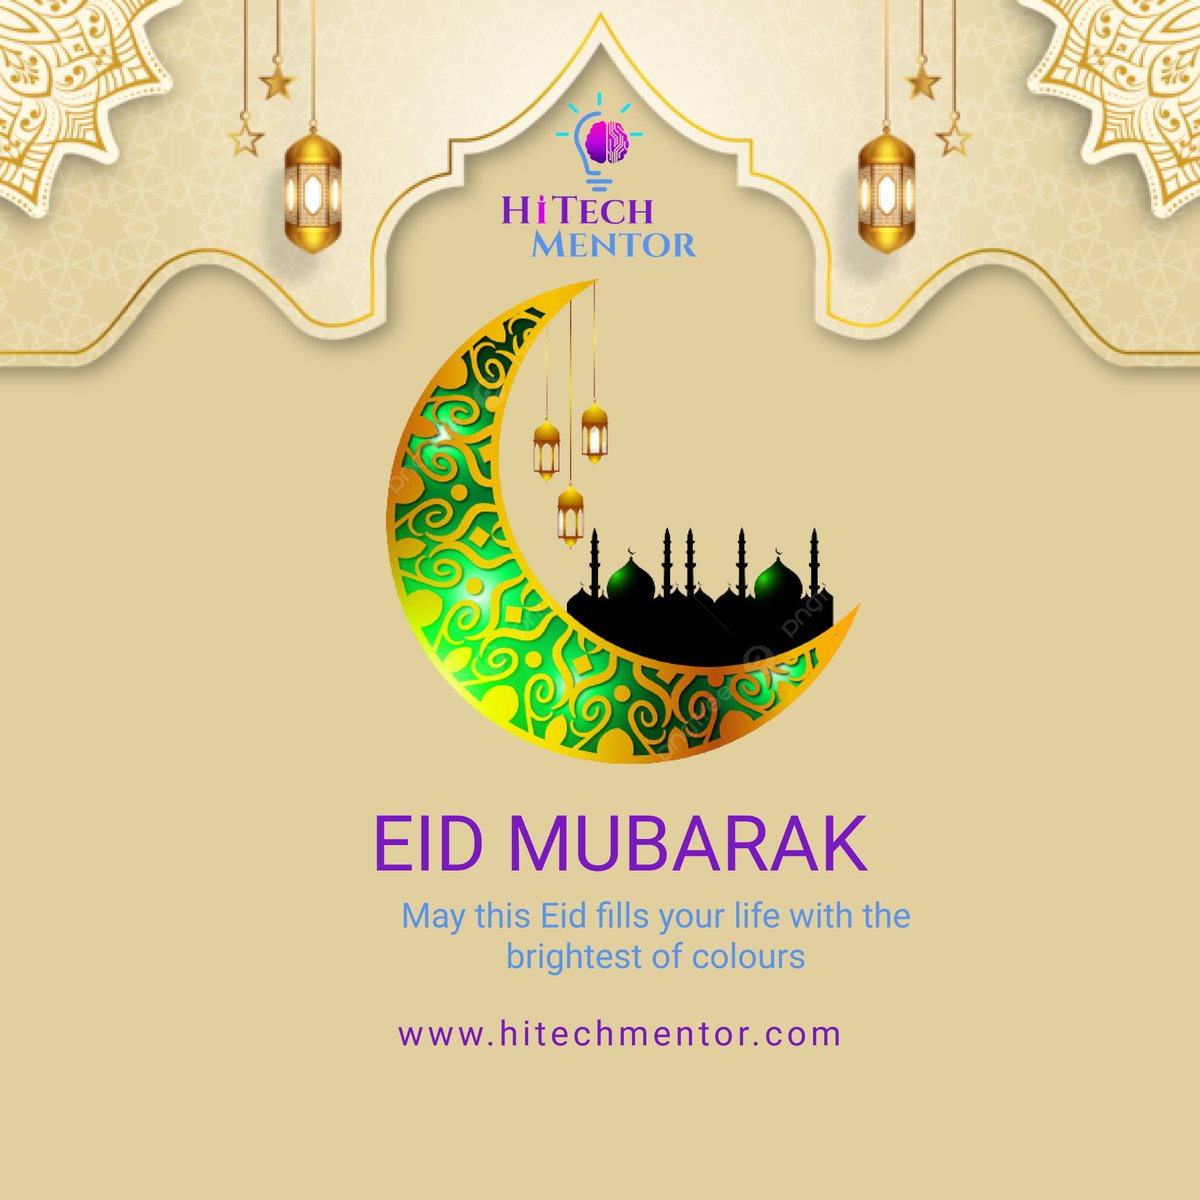 As we celebrate Eid al-Fitr, let's remember the importance of unity, compassion, and kindness. Wishing you and your loved ones a blessed Eid. #EidMubarak #hitechmentor
#EidAlFitr
#EidCelebrations
#MuslimFestivals
#BlessingsOfEid
#FestivalOfBreakingFast
#EidWishes
#EidMubarak2023